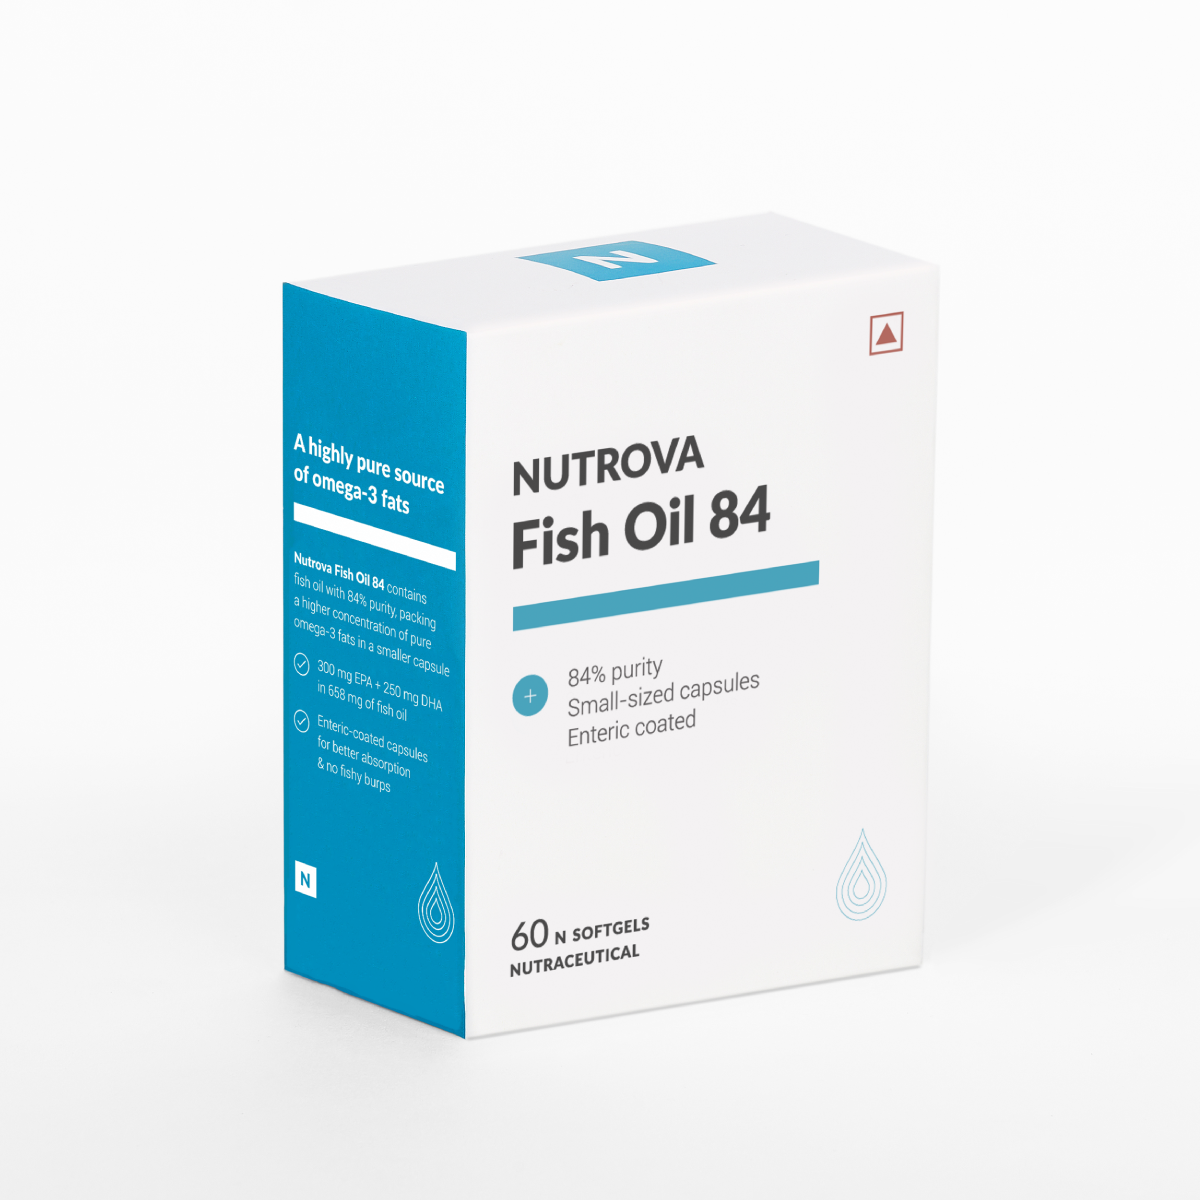 Nutrova Fish Oil 84